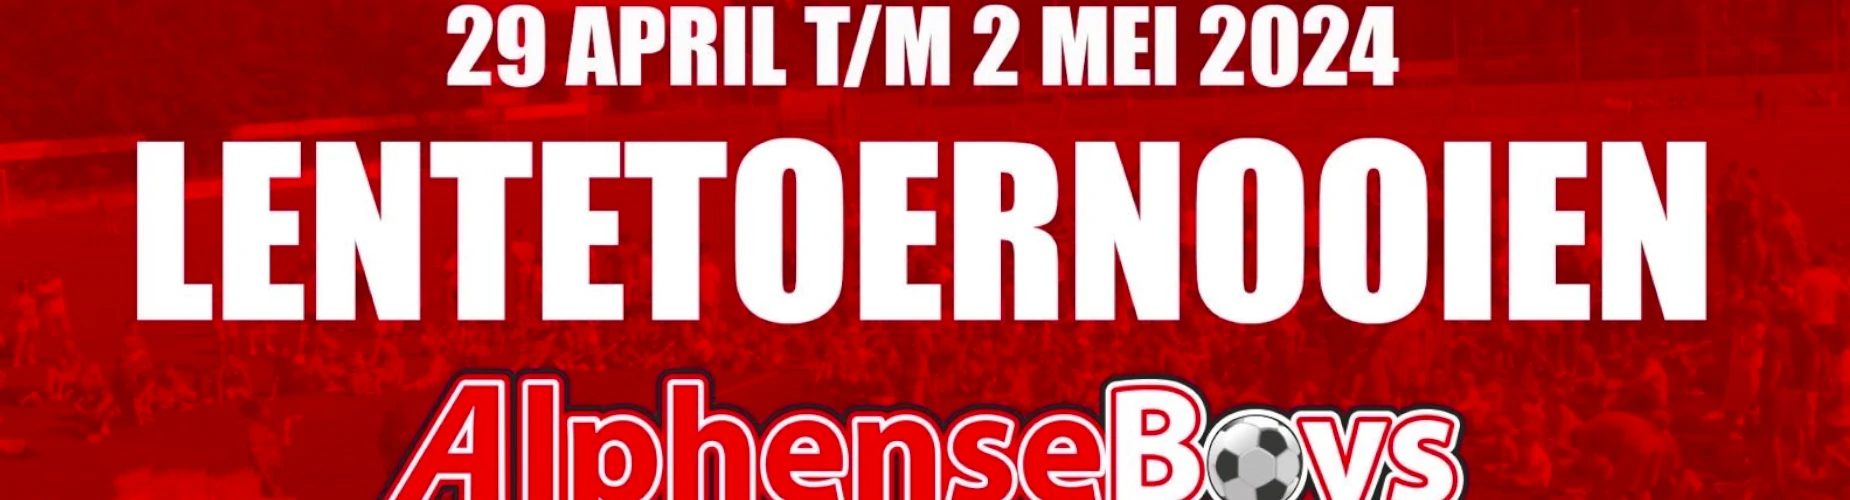 Banner - JO14 - Lentetoernooi Alphense Boys - Alphense Boys - Alphen aan den Rijn